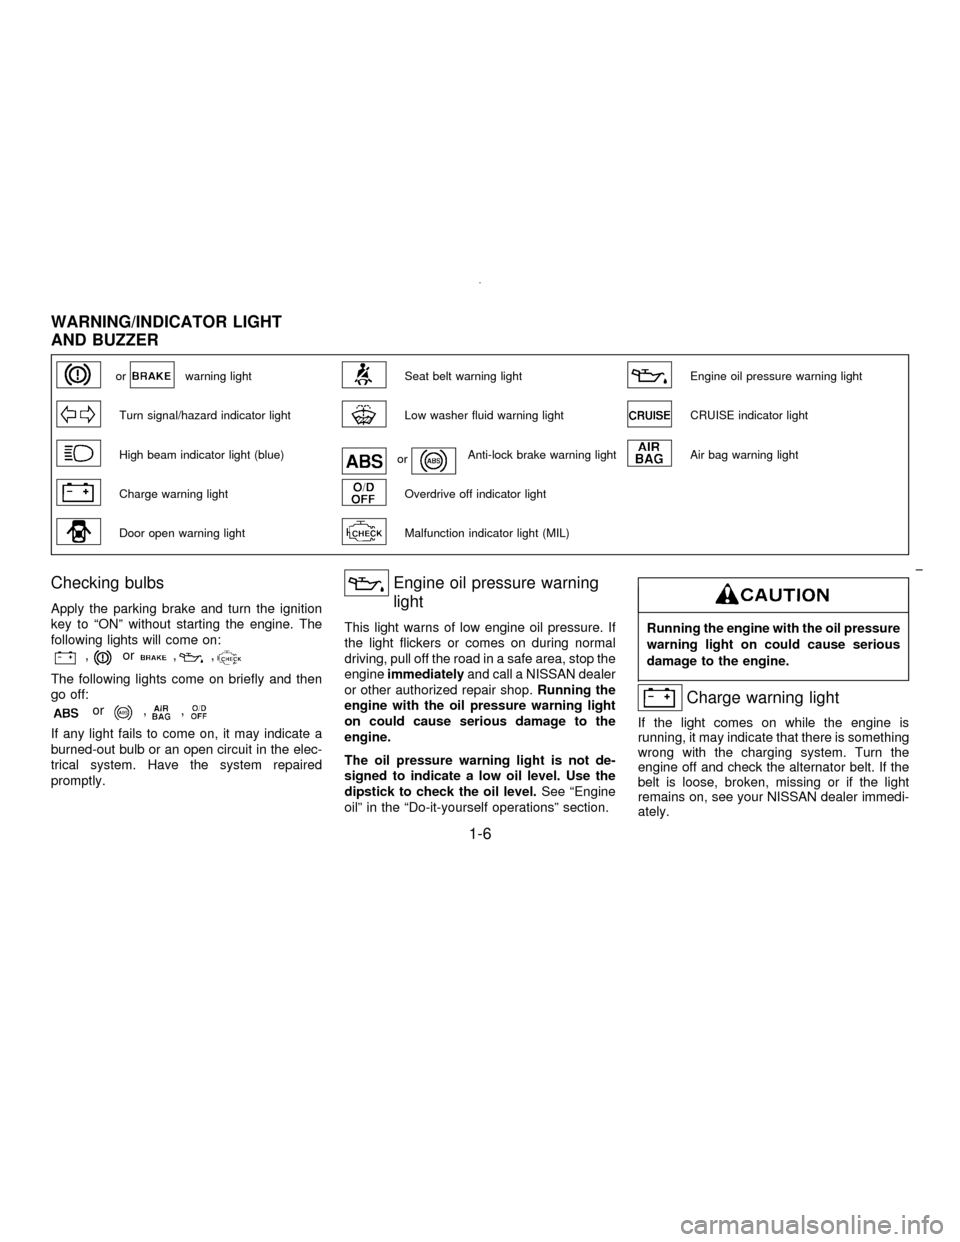 NISSAN MAXIMA 1996 A32 / 4.G Owners Manual orwarning lightSeat belt warning lightEngine oil pressure warning light
Turn signal/hazard indicator lightLow washer fluid warning lightCRUISE indicator light
High beam indicator light (blue)orAnti-lo